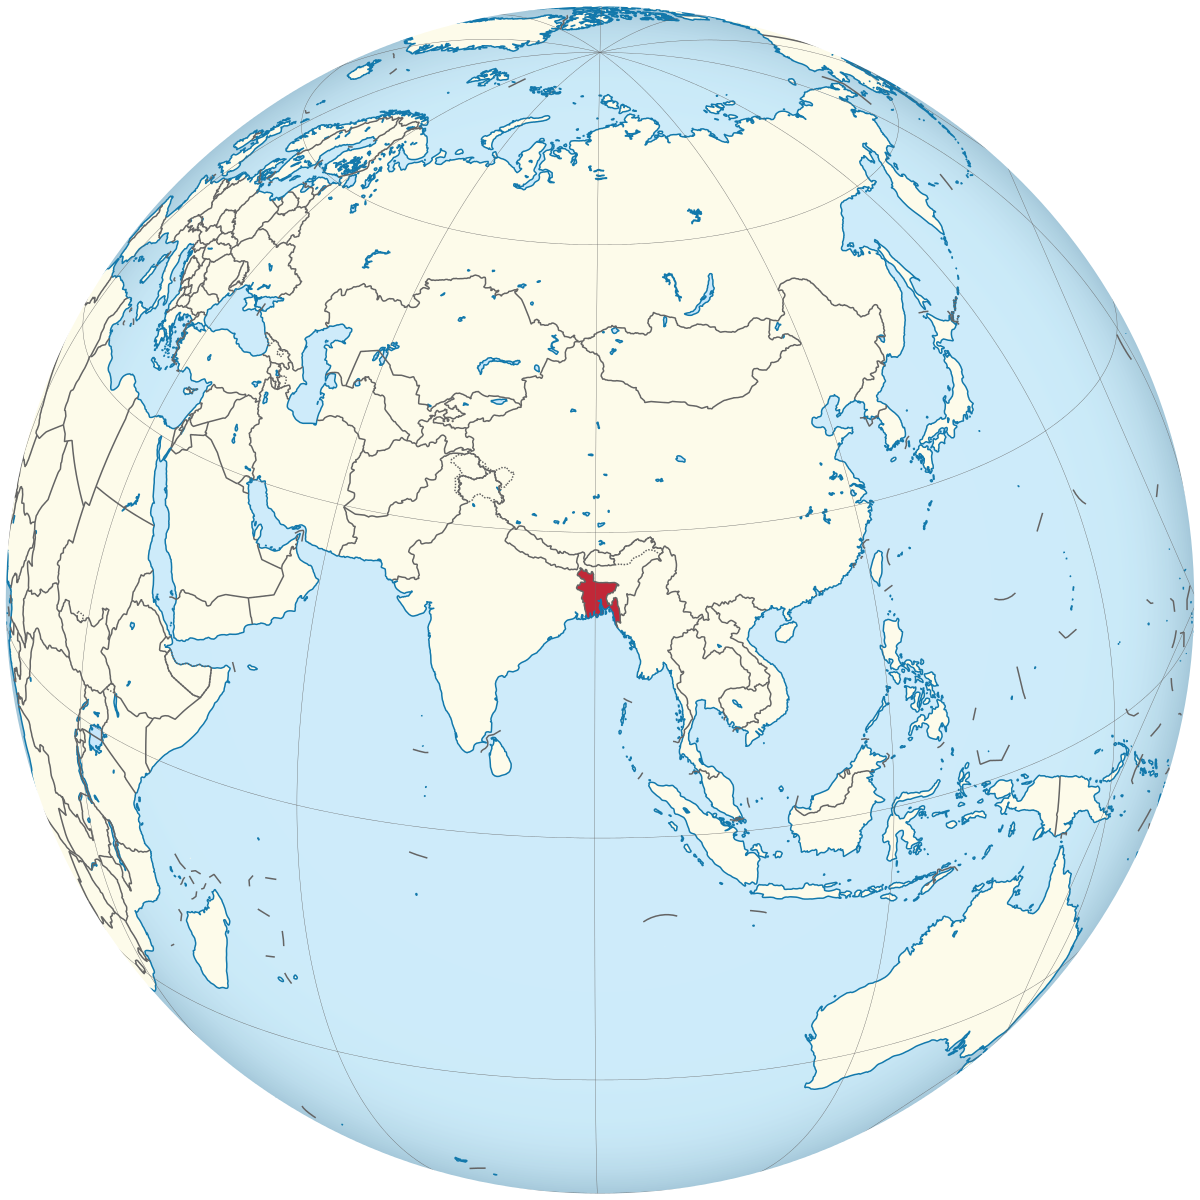 Bangladesh on the globe